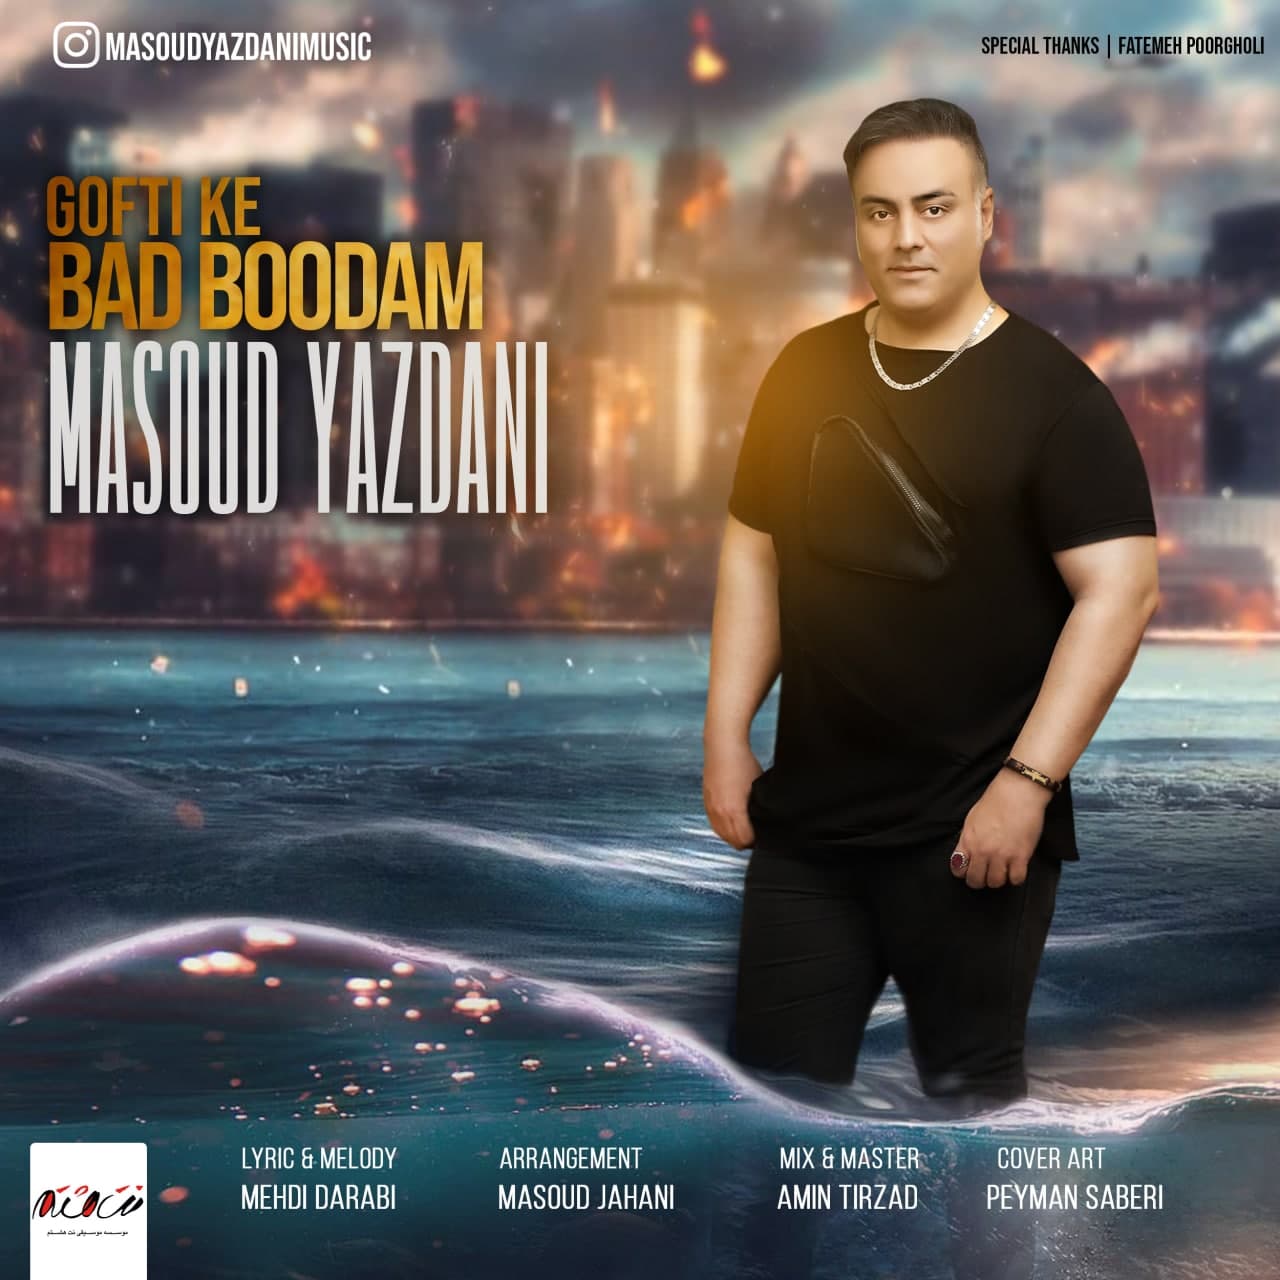 Masoud Yazdani – Gofti Ke Bad Boodam